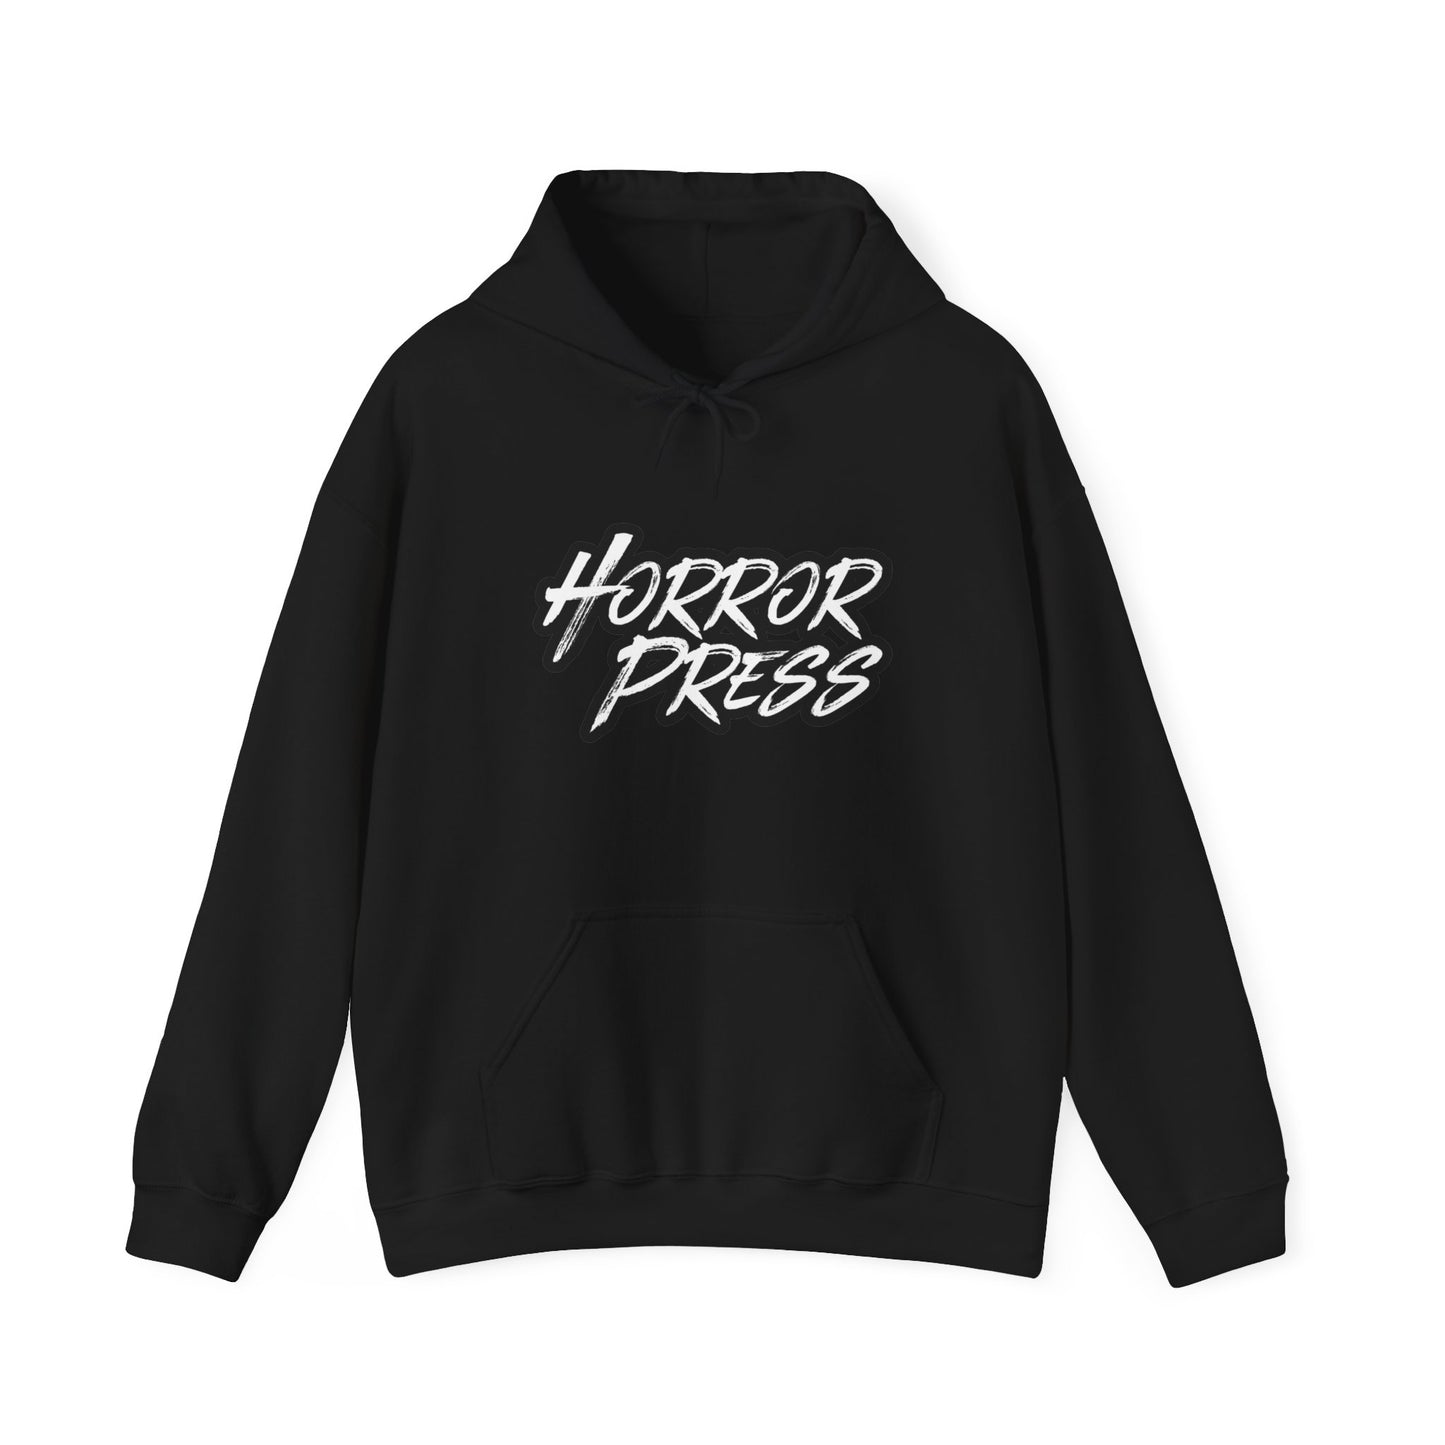 Official Horror Press Hoodie - Unisex Black Hooded Sweatshirt - Horror Press Hoodie for Men - Horror Press Hoodie for Women - Horror Fan Gift